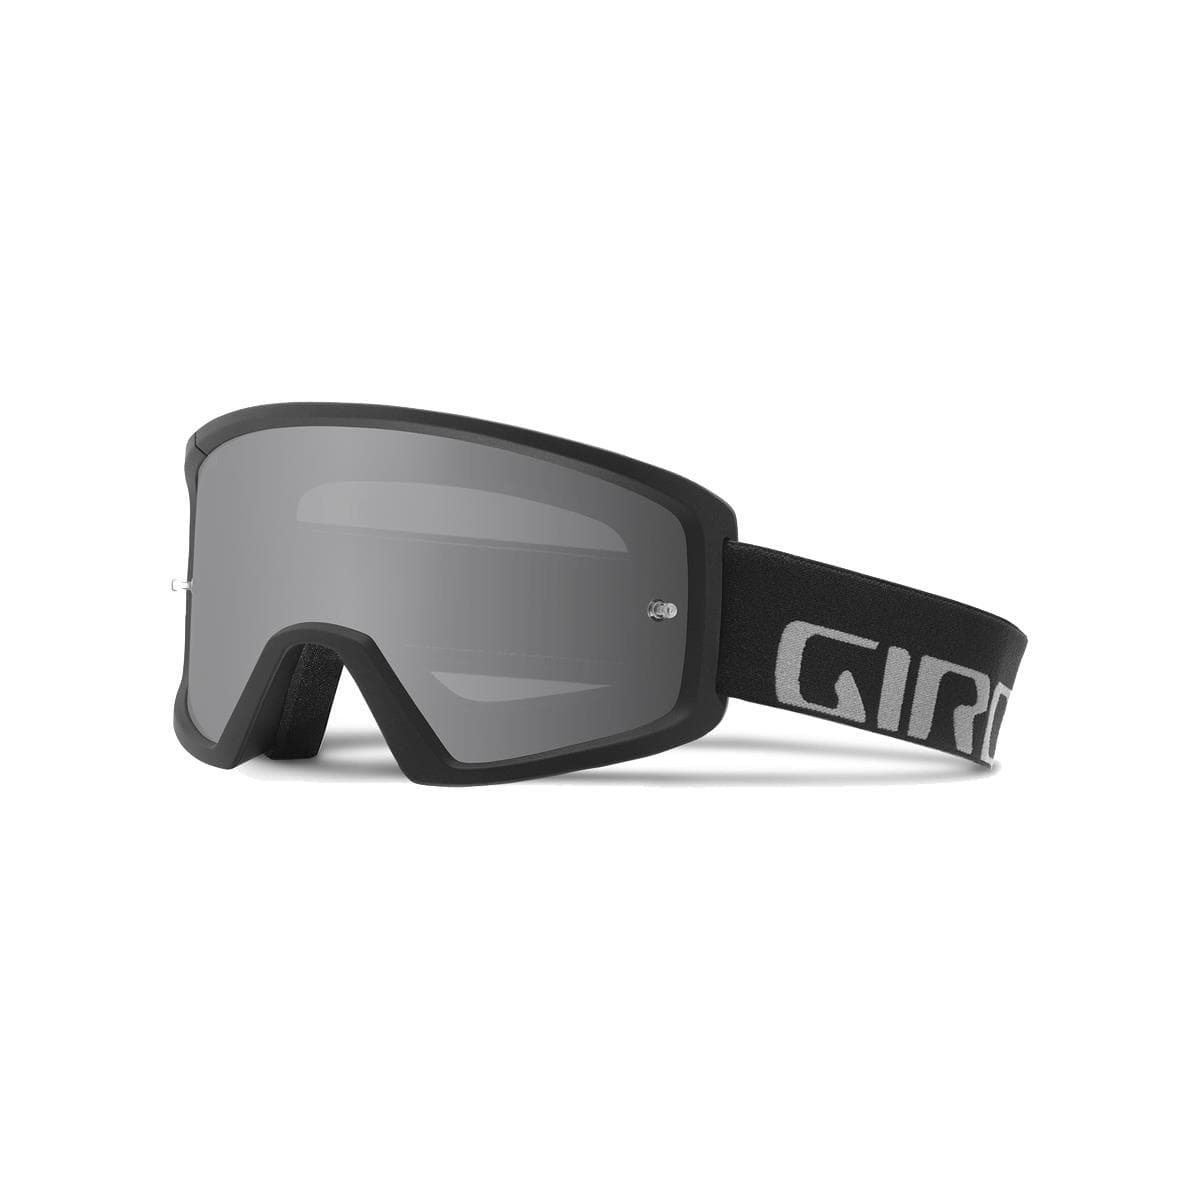 Giro Blok Mtb Goggles 2019: Black/Grey Smoke Lens Adult